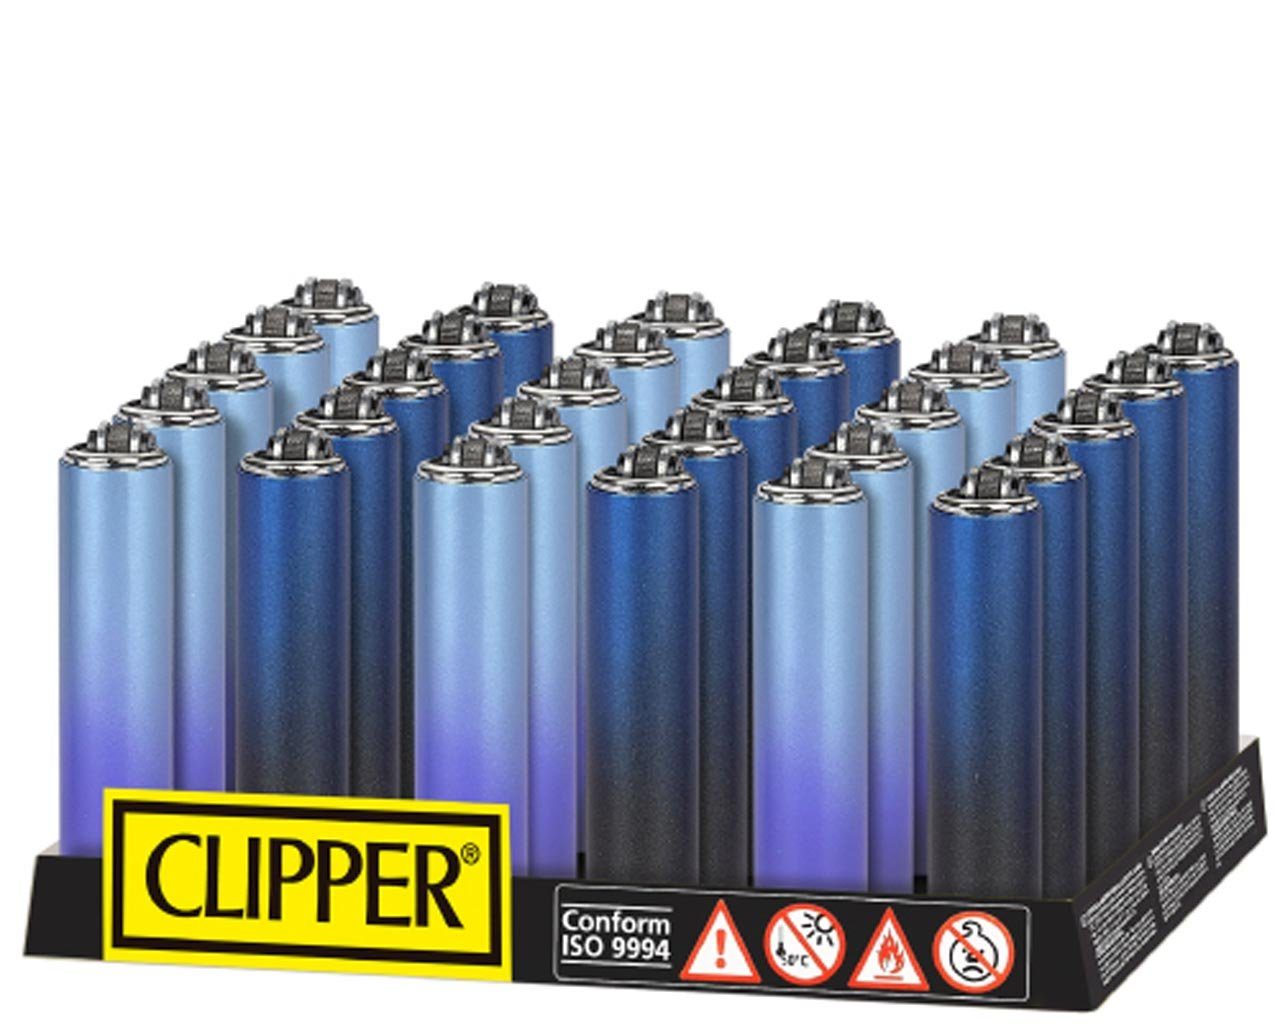 CLIPPER Feuerzeug Clipper Metall Cover Hülle Limited Feuerzeug Pfeifen Pfeife Metall, Hülle mit Clipper Feuerzeug